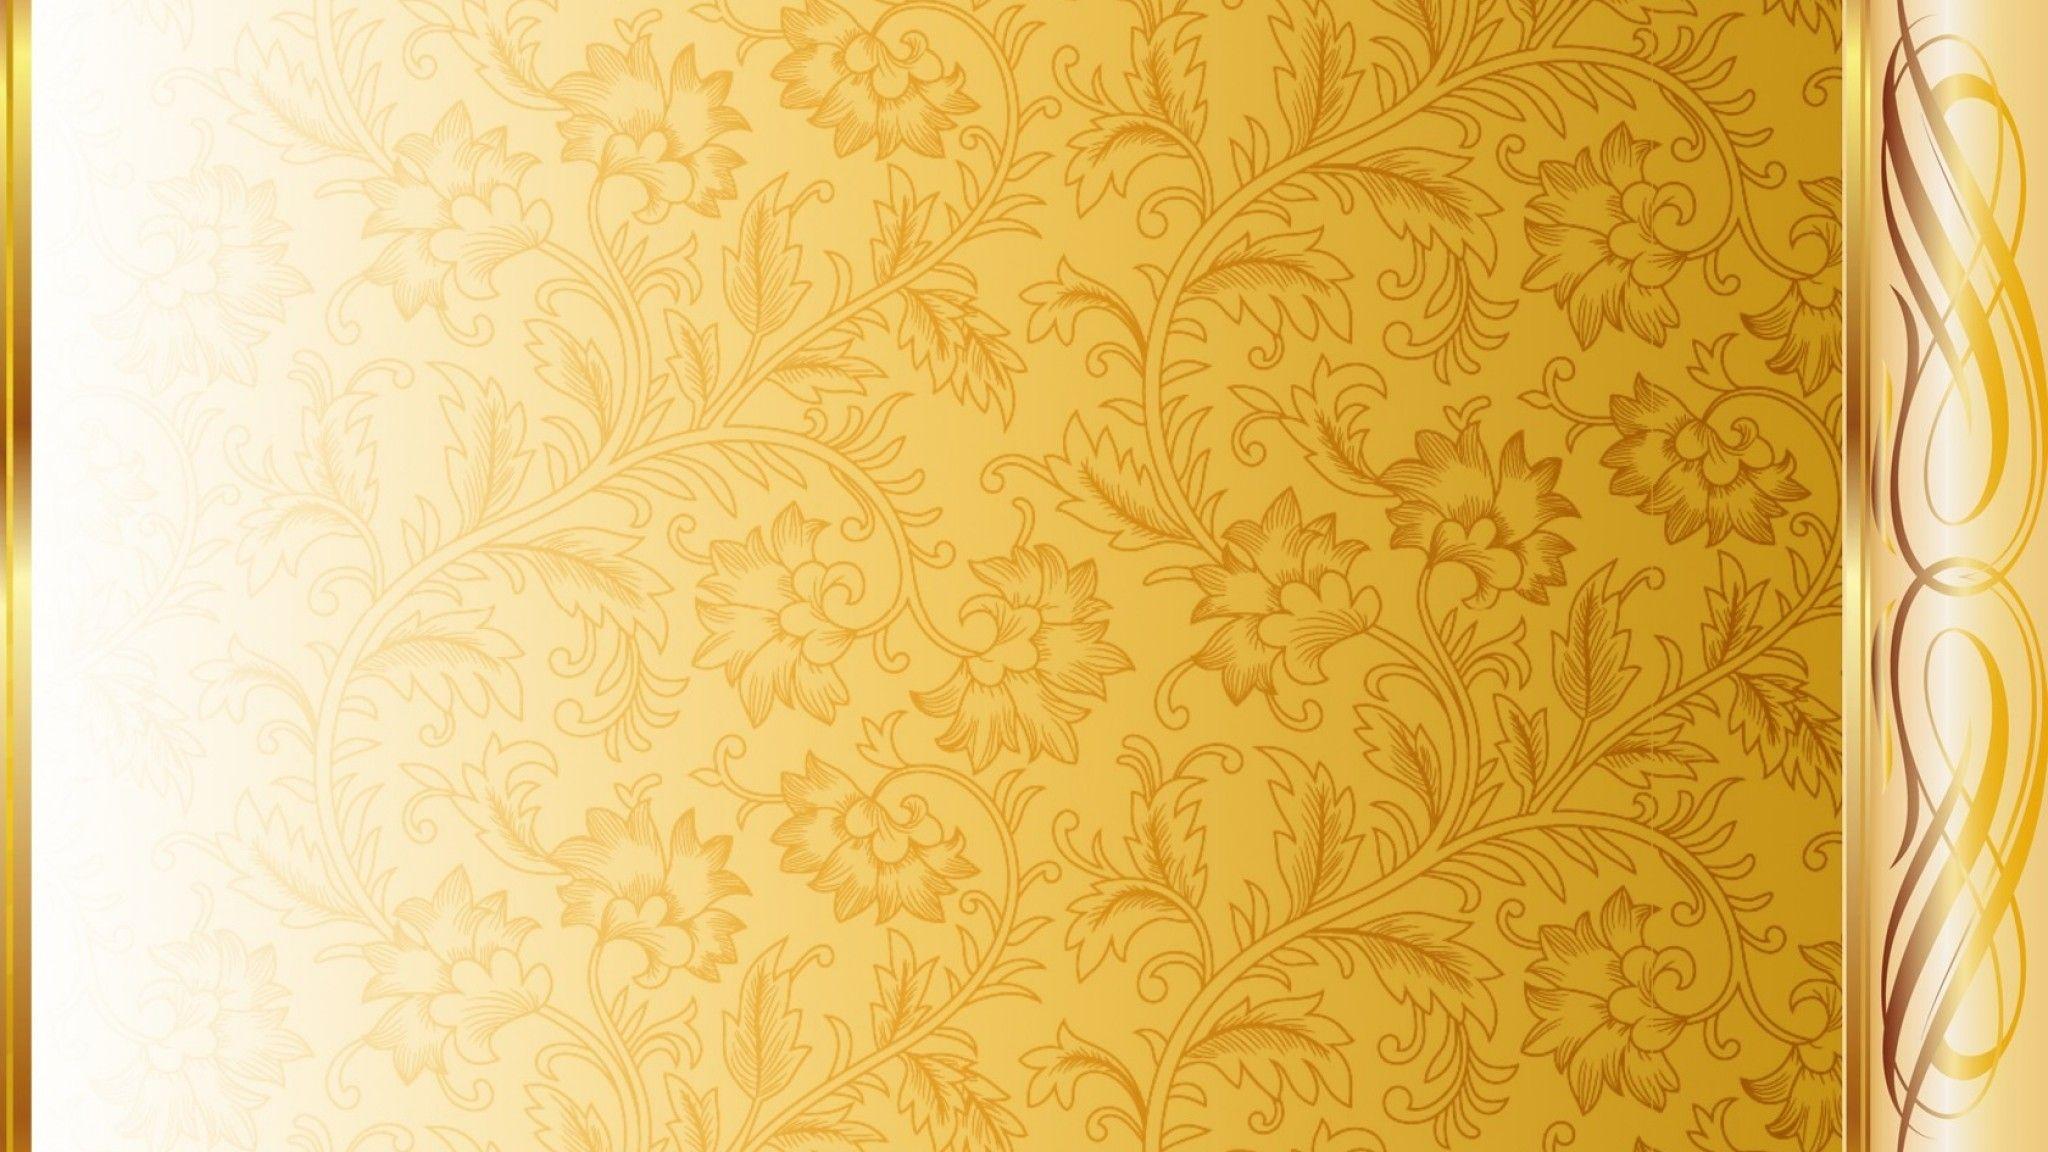 Golden Backgrounds Wallpaper Cave